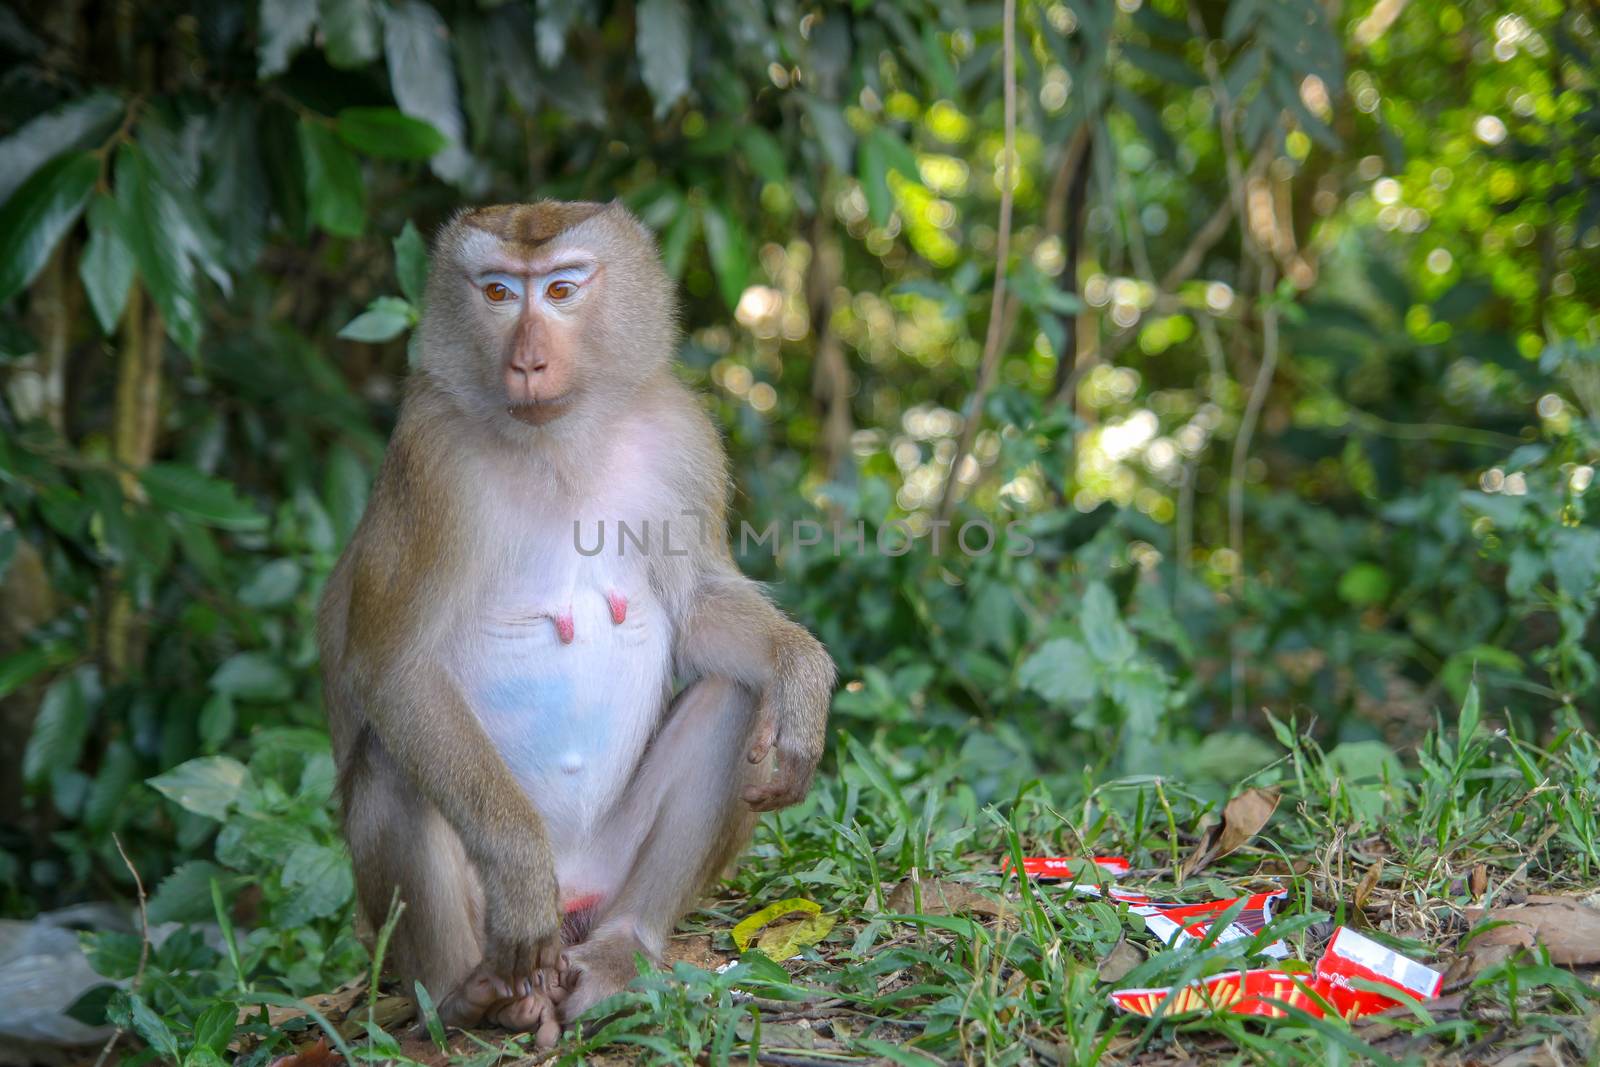 Monkey sitdown near Garbage in side forest by pumppump